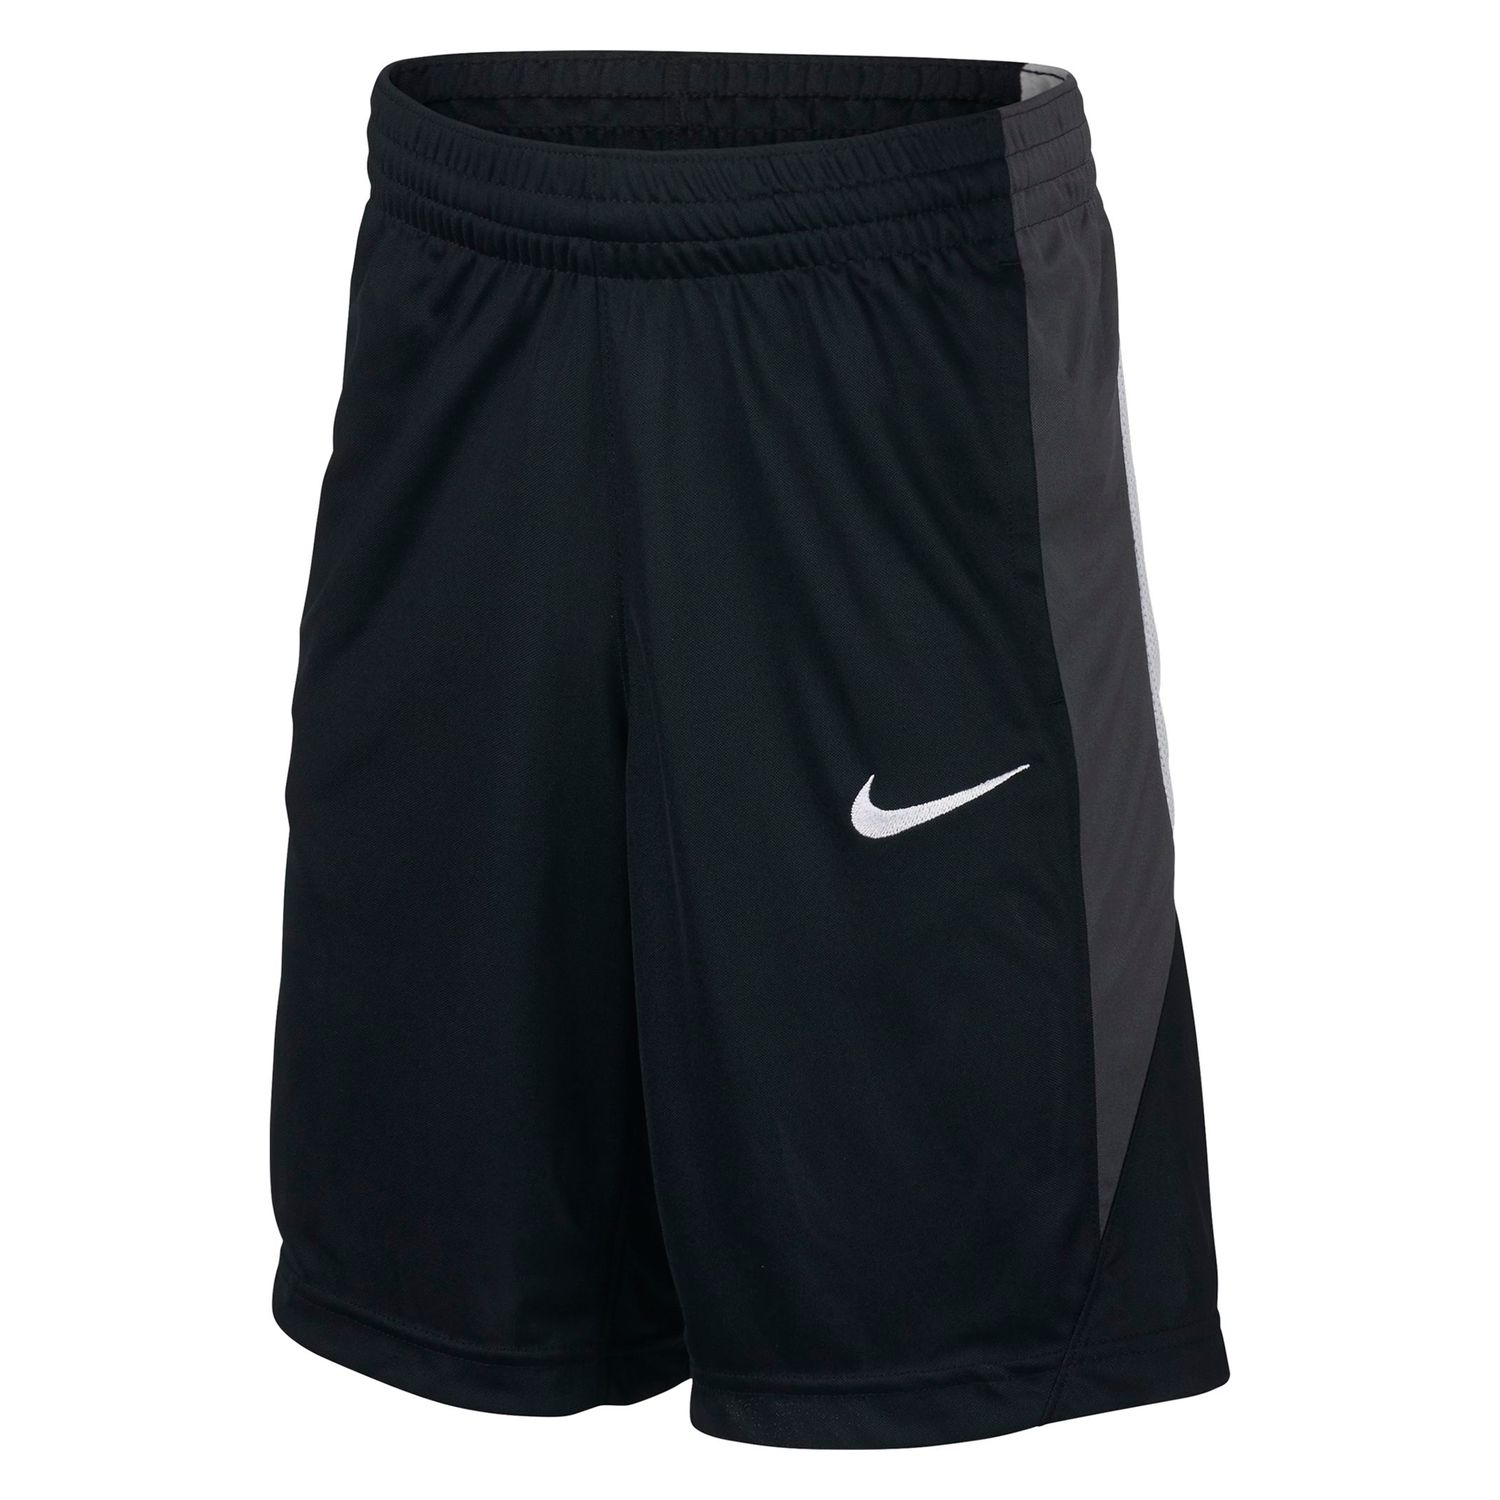 Boys 8-20 Nike Avalanche Basketball Shorts